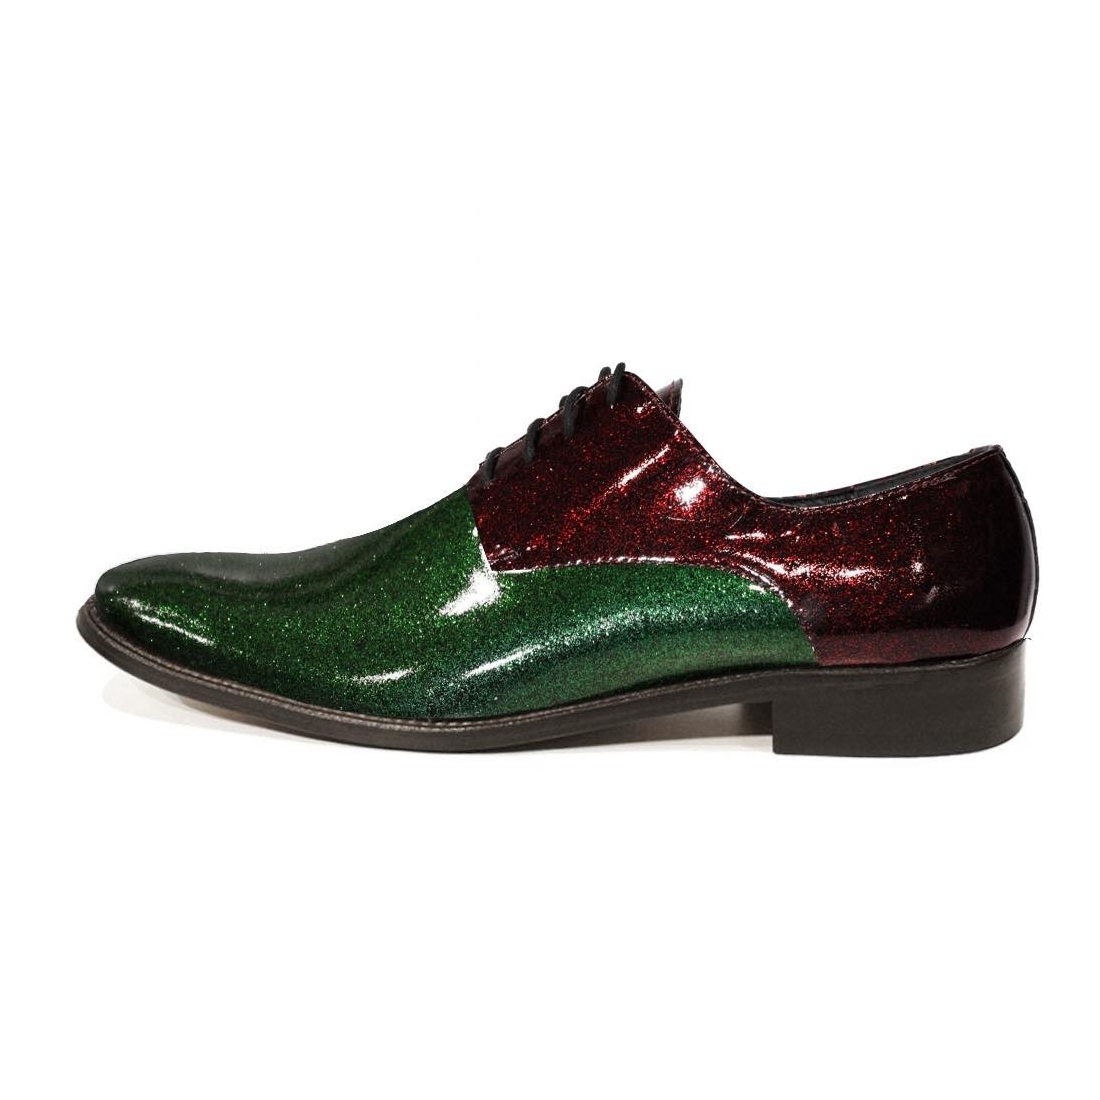 Modello Luccichio - Классическая обувь - Handmade Colorful Italian Leather Shoes